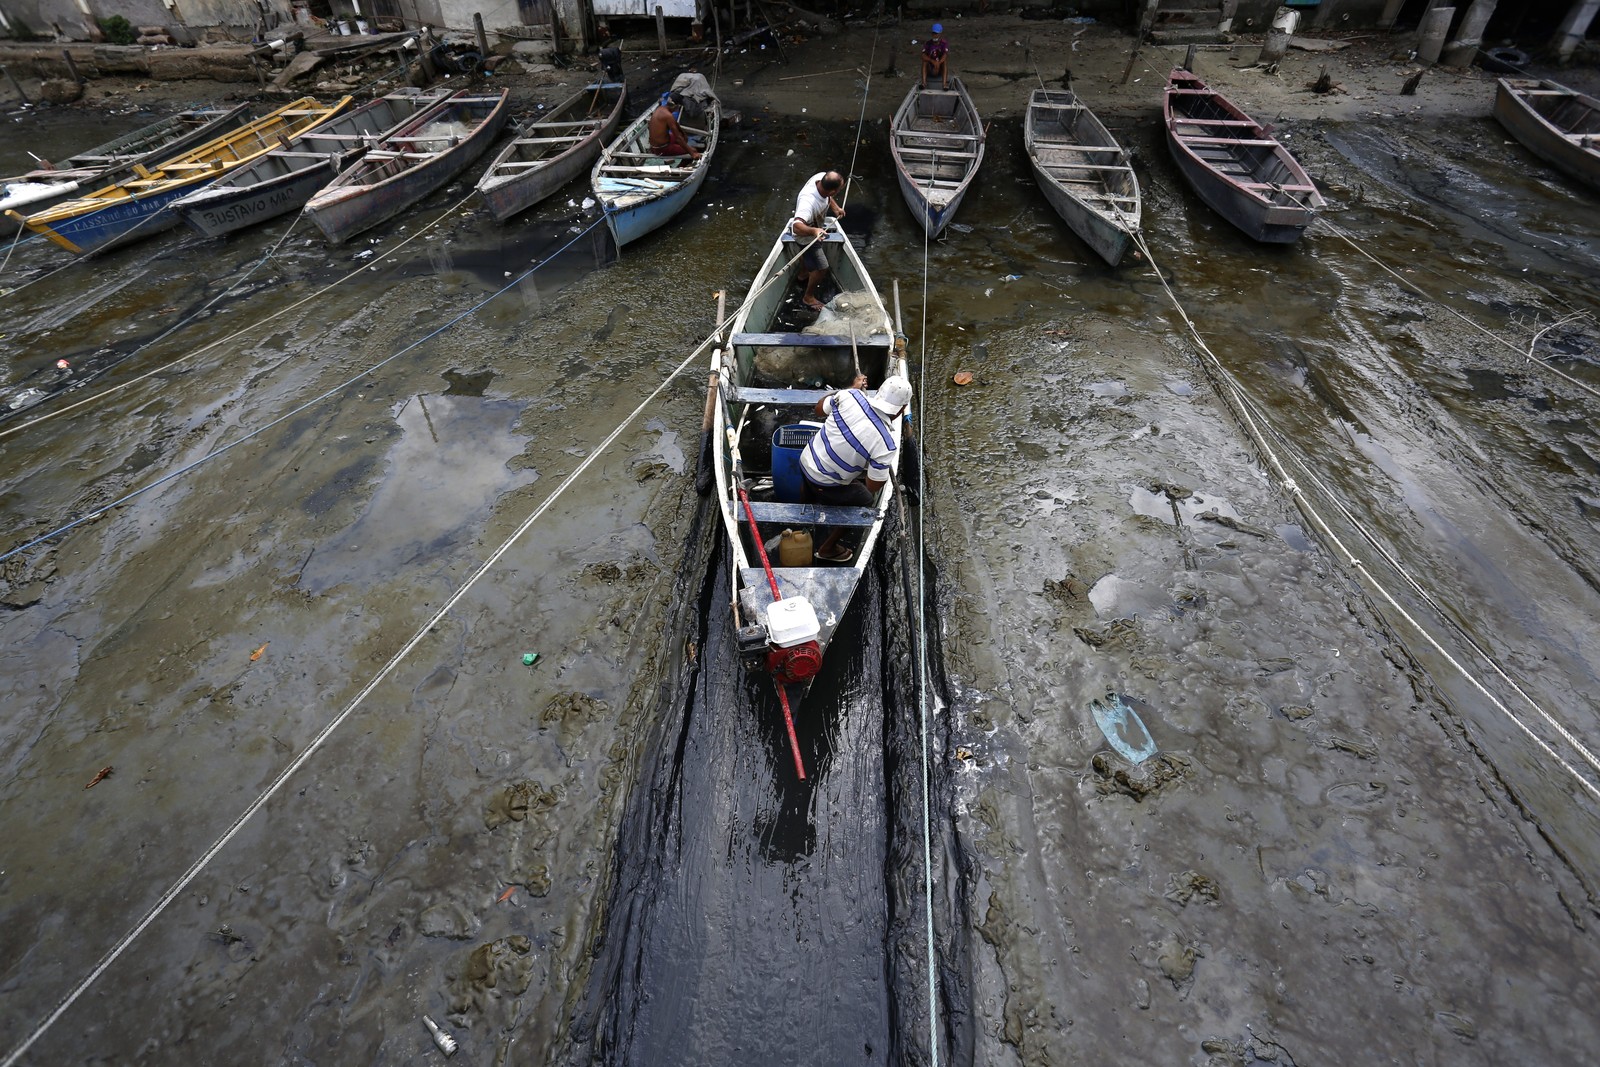 Poluição e assoreamento da baía dificulta a vida de pescadores locais  — Foto: Custodio Coimbra